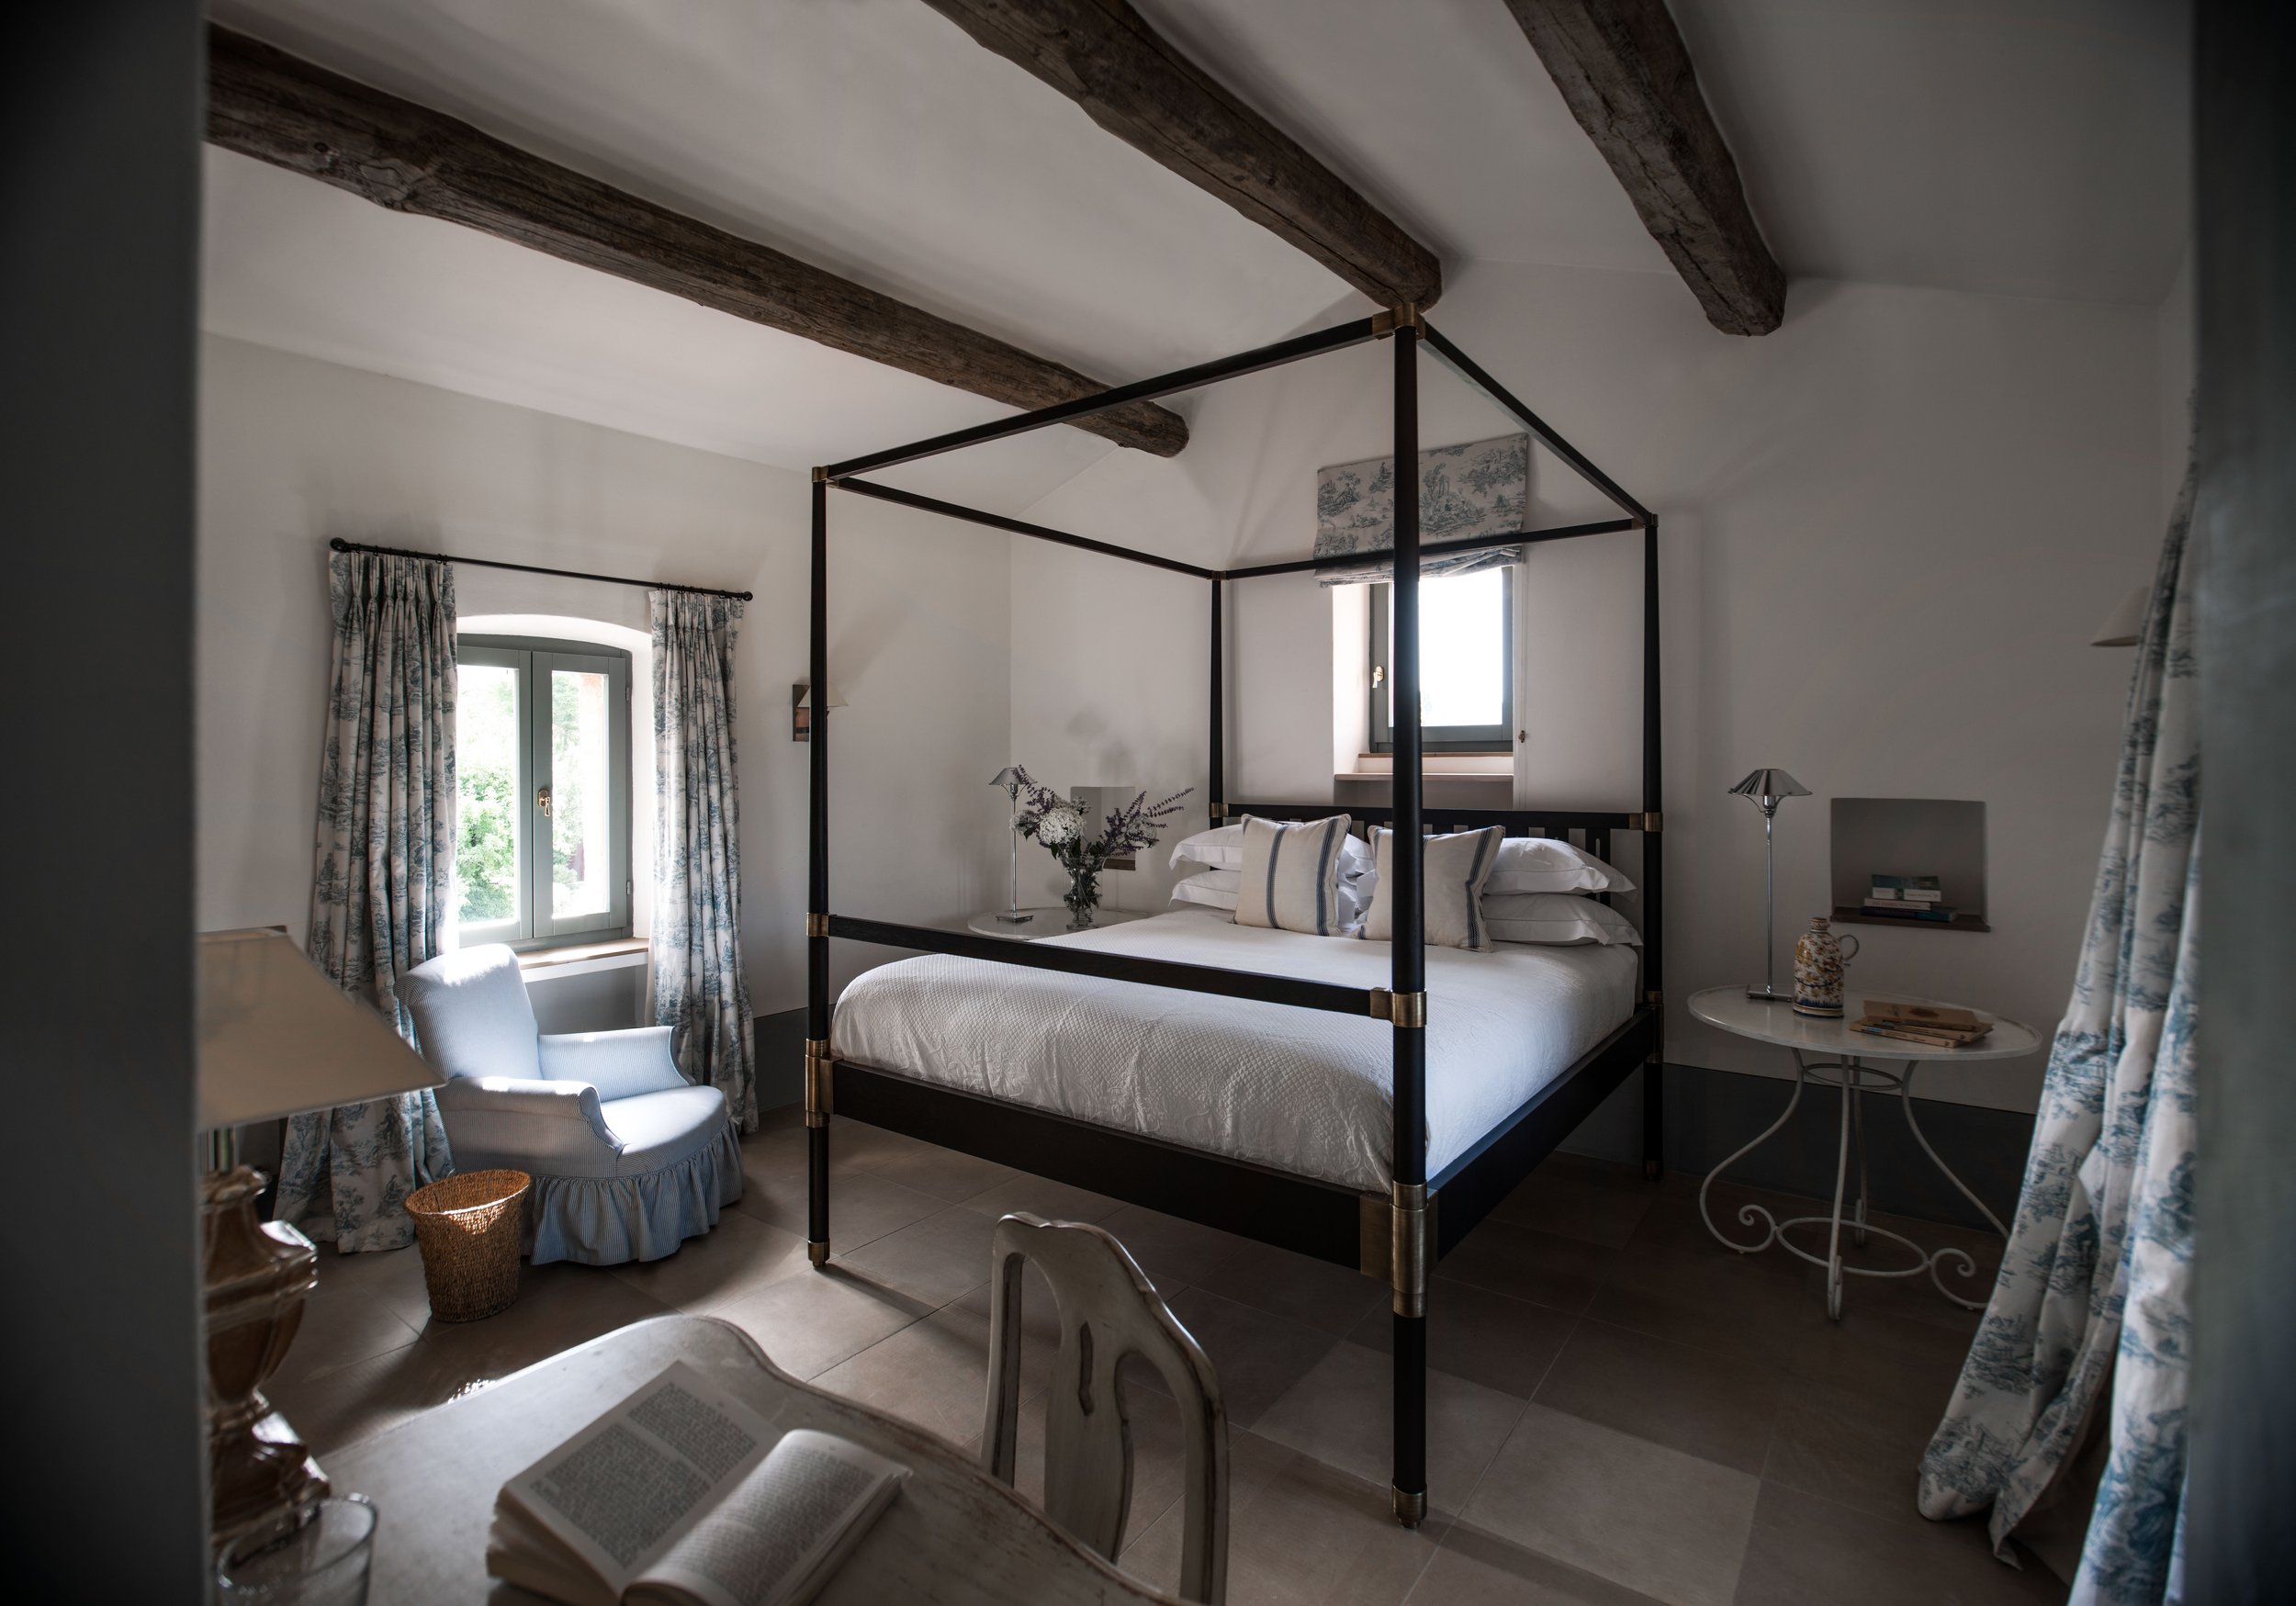 Francis York Exclusive Luxury Villa Rental in Umbria, Italy 18.jpg